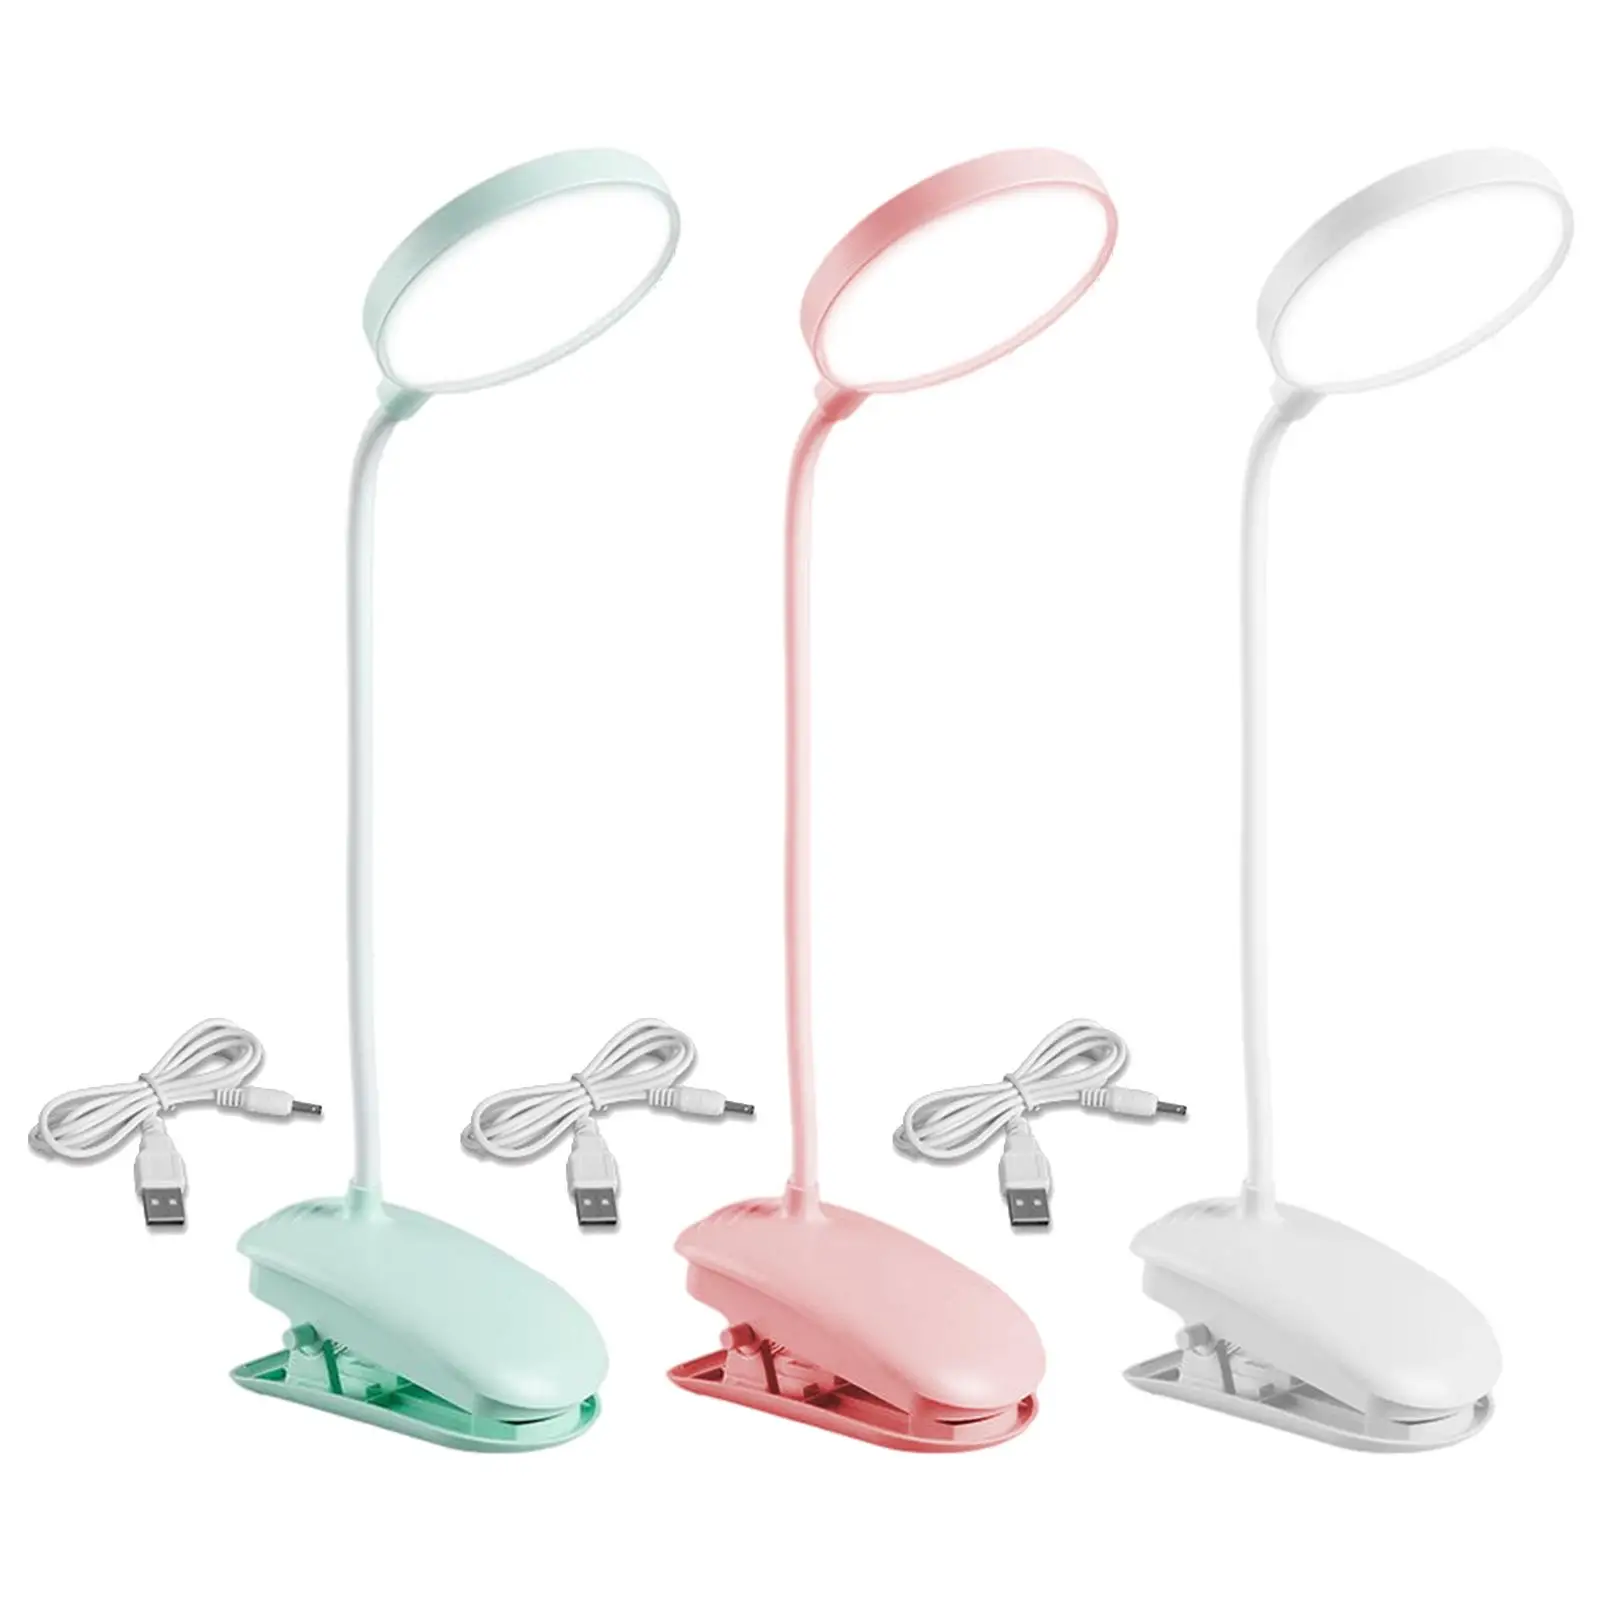 LED Desk Light Table Lamp Clip On USB Dimmable Eye Caring Adjustable Flexible for Living Room Bedside Home Bedroom Study